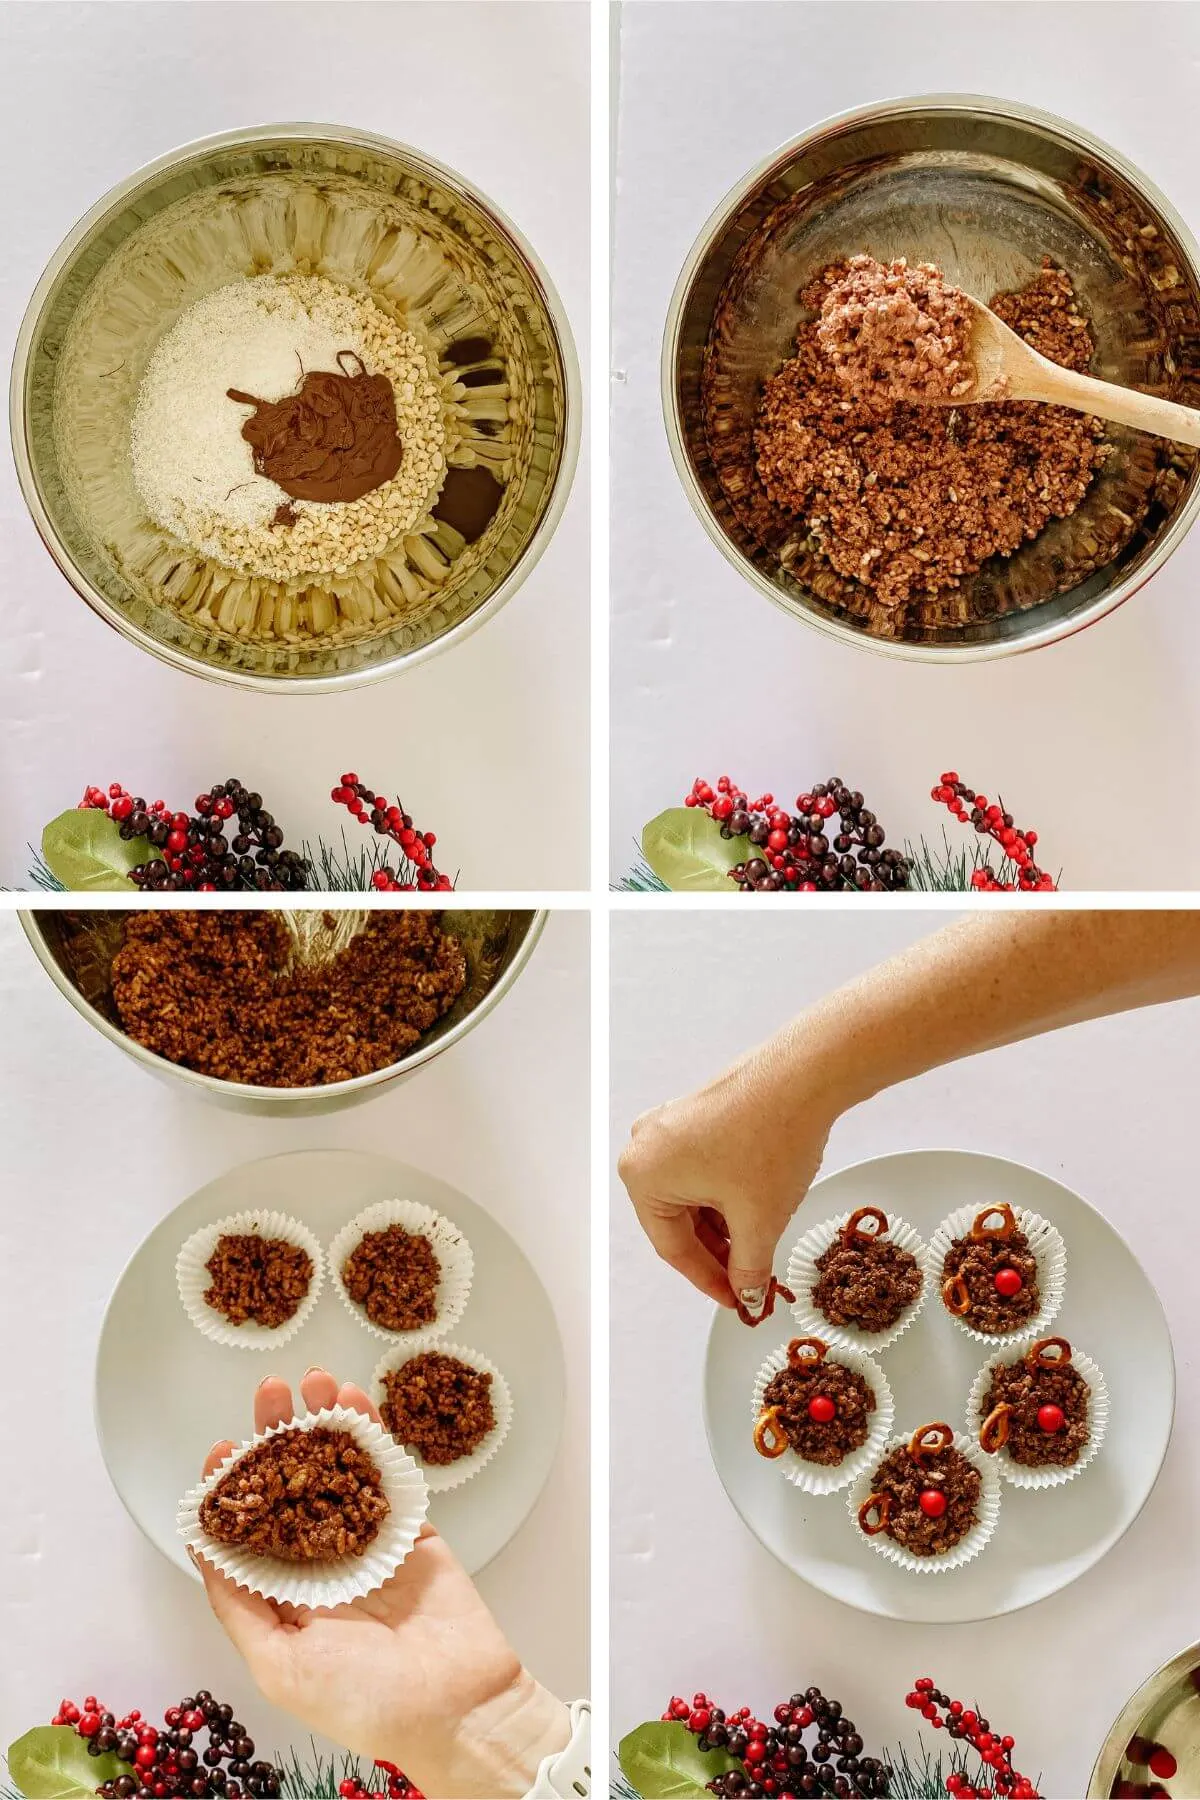 How to make chocolate reindeer crackles